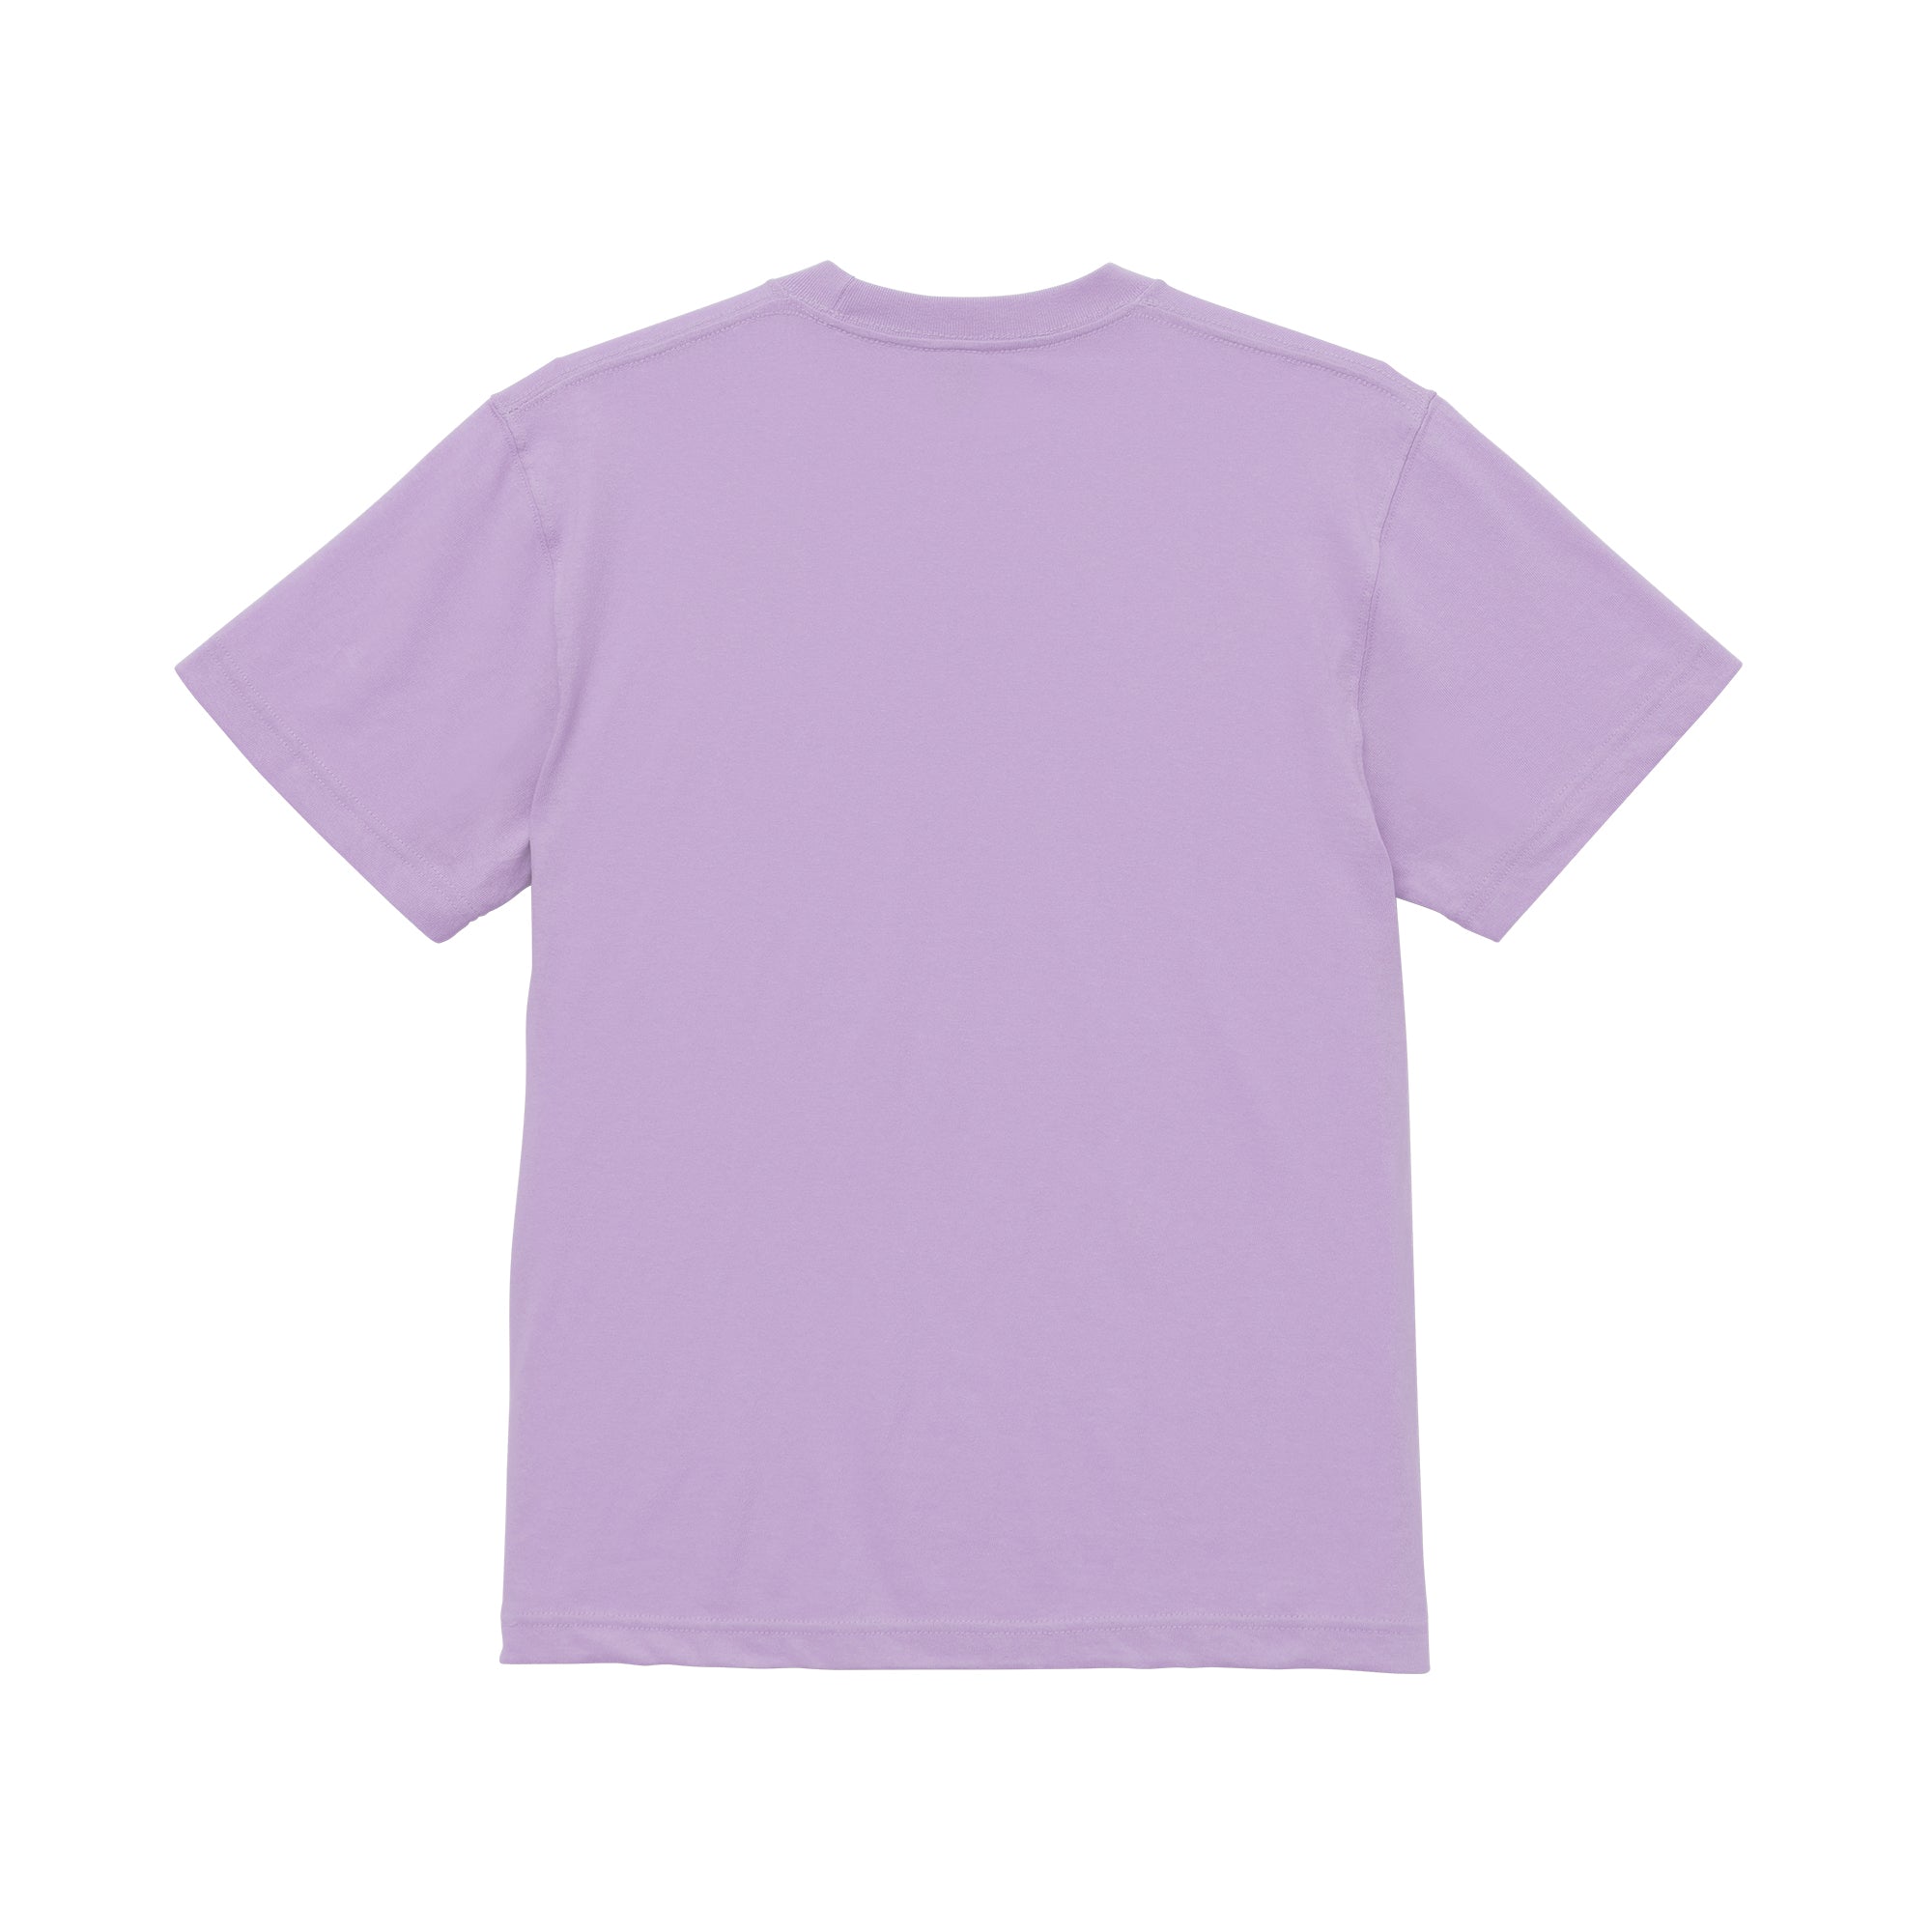 4208 - 6.0 oz Heavyweight T-shirt - Lilac